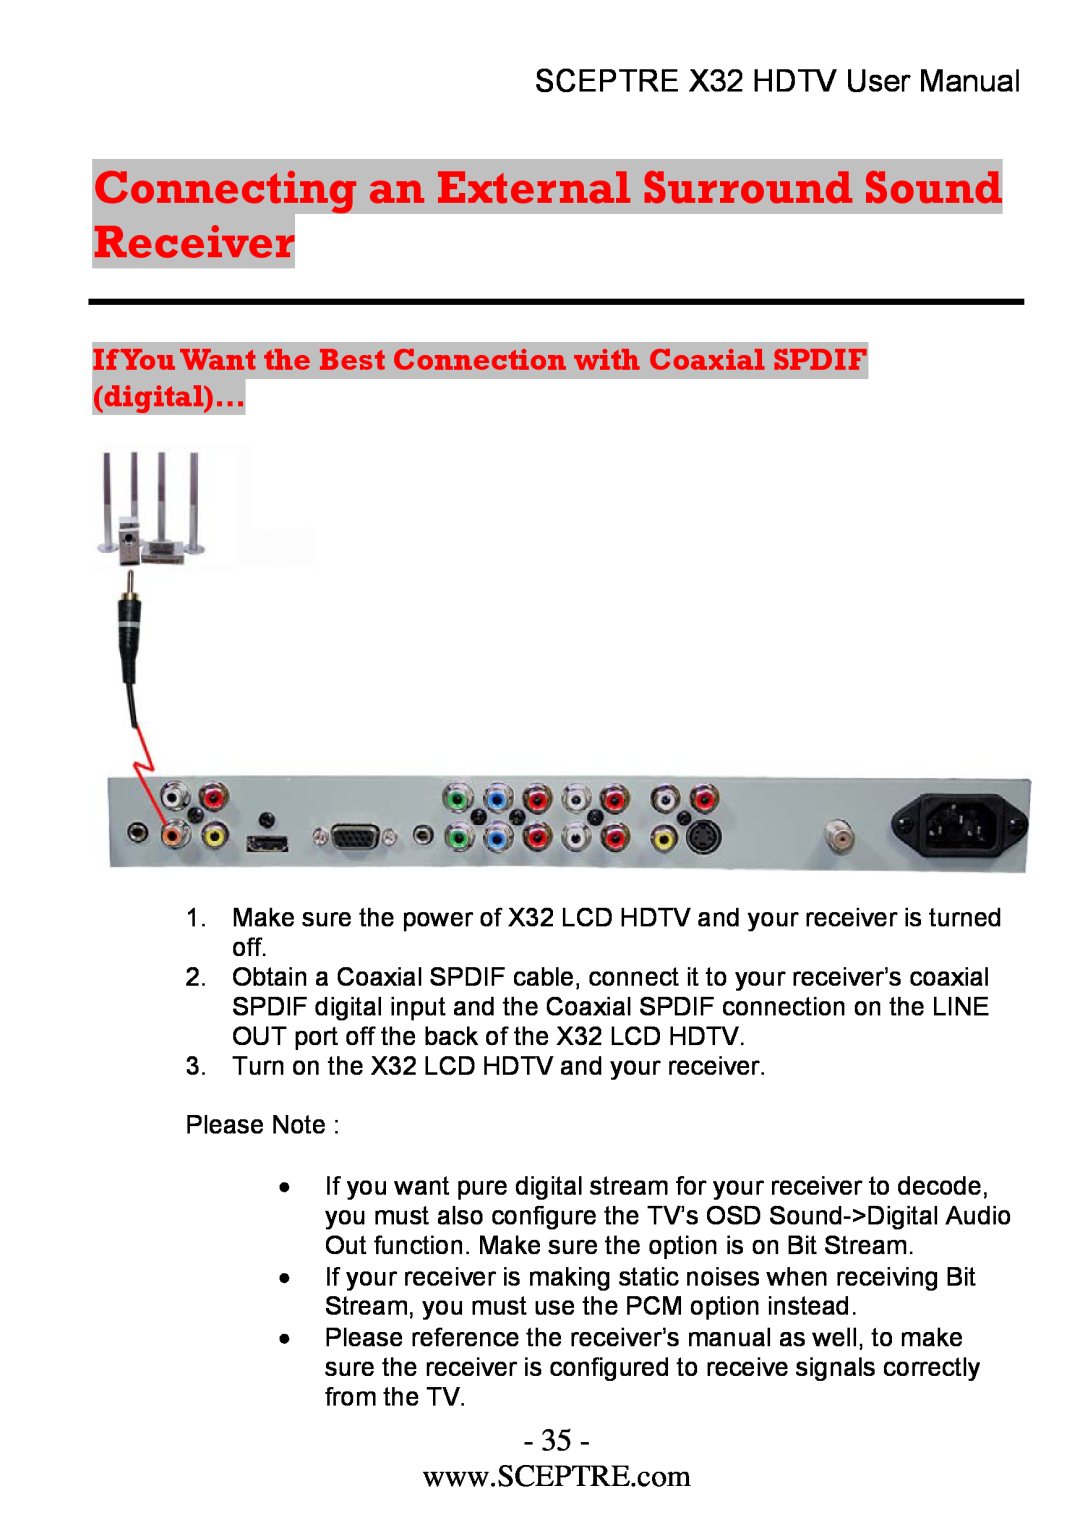 Sceptre Technologies x32 user manual Connecting an External Surround Sound Receiver, SCEPTRE X32 HDTV User Manual 